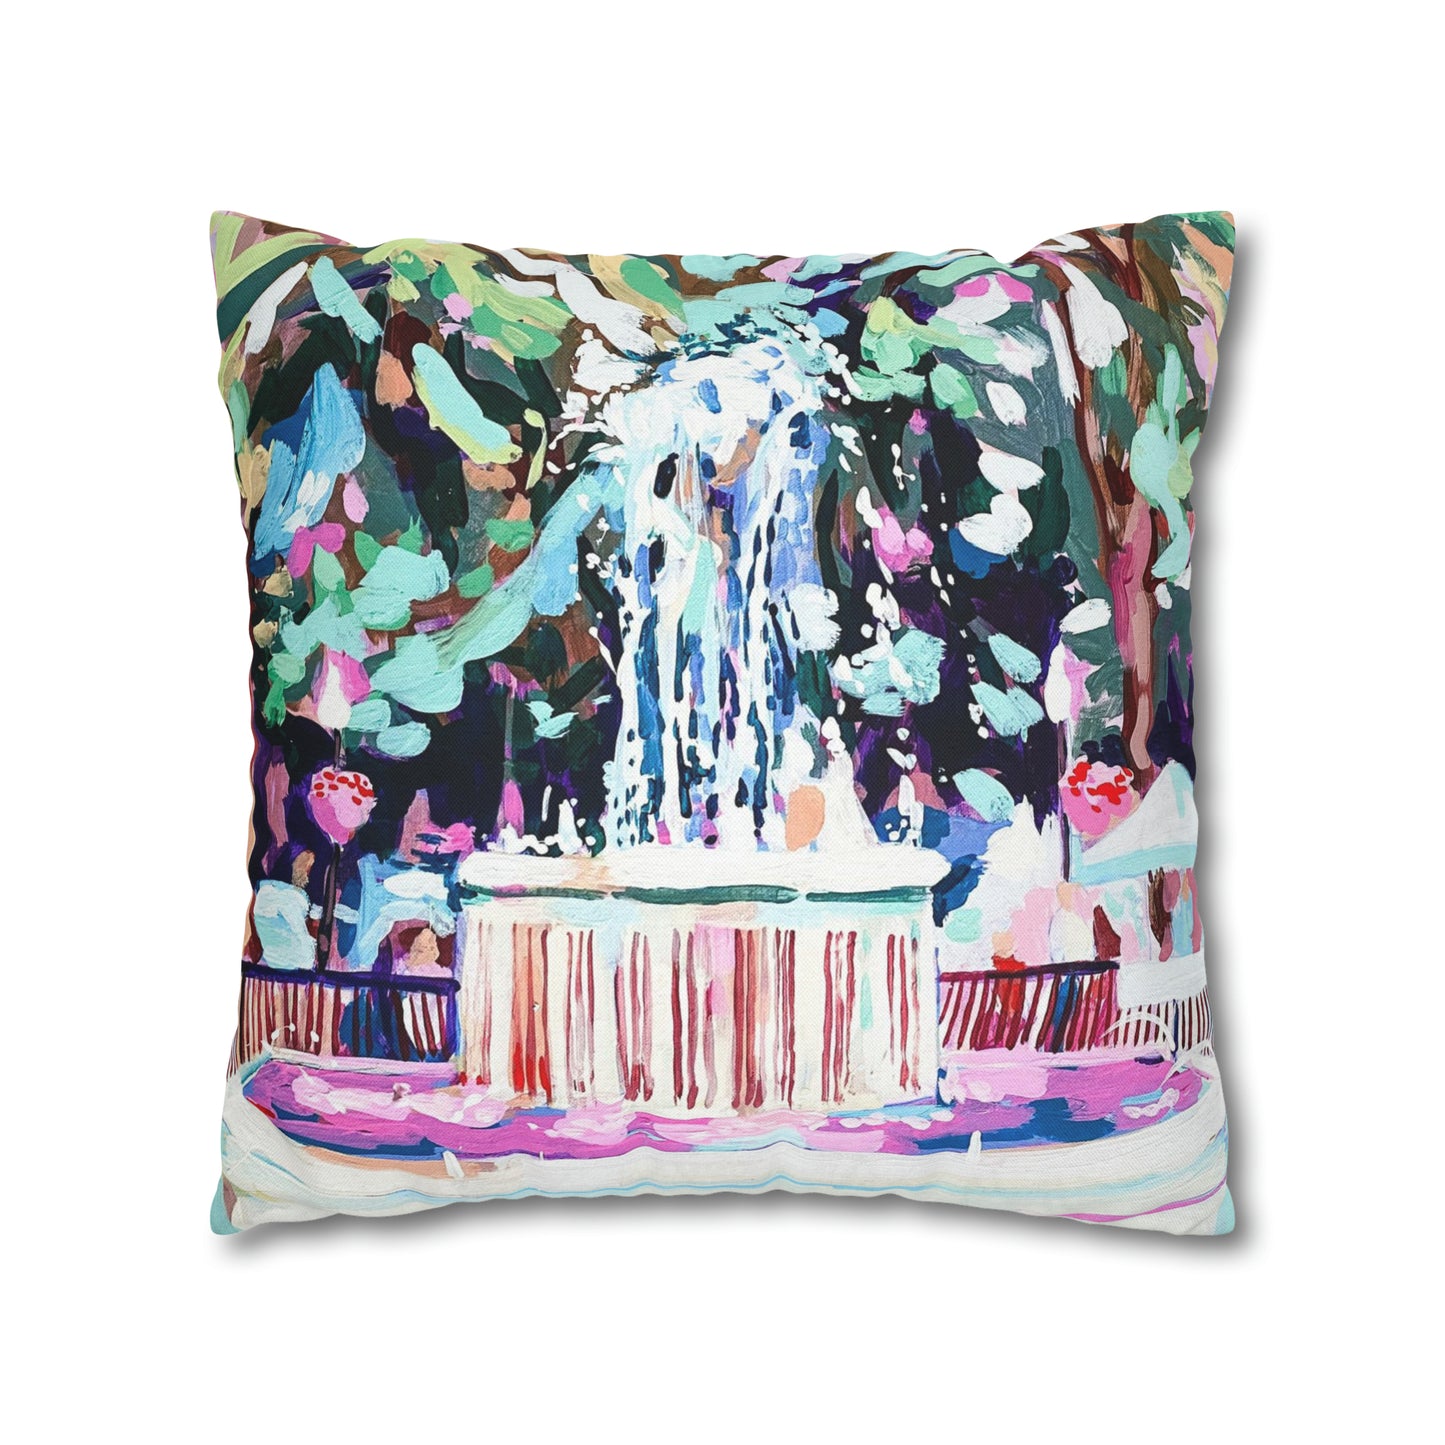 Iowa Capitol/Washington Fountain double sided pillow cover